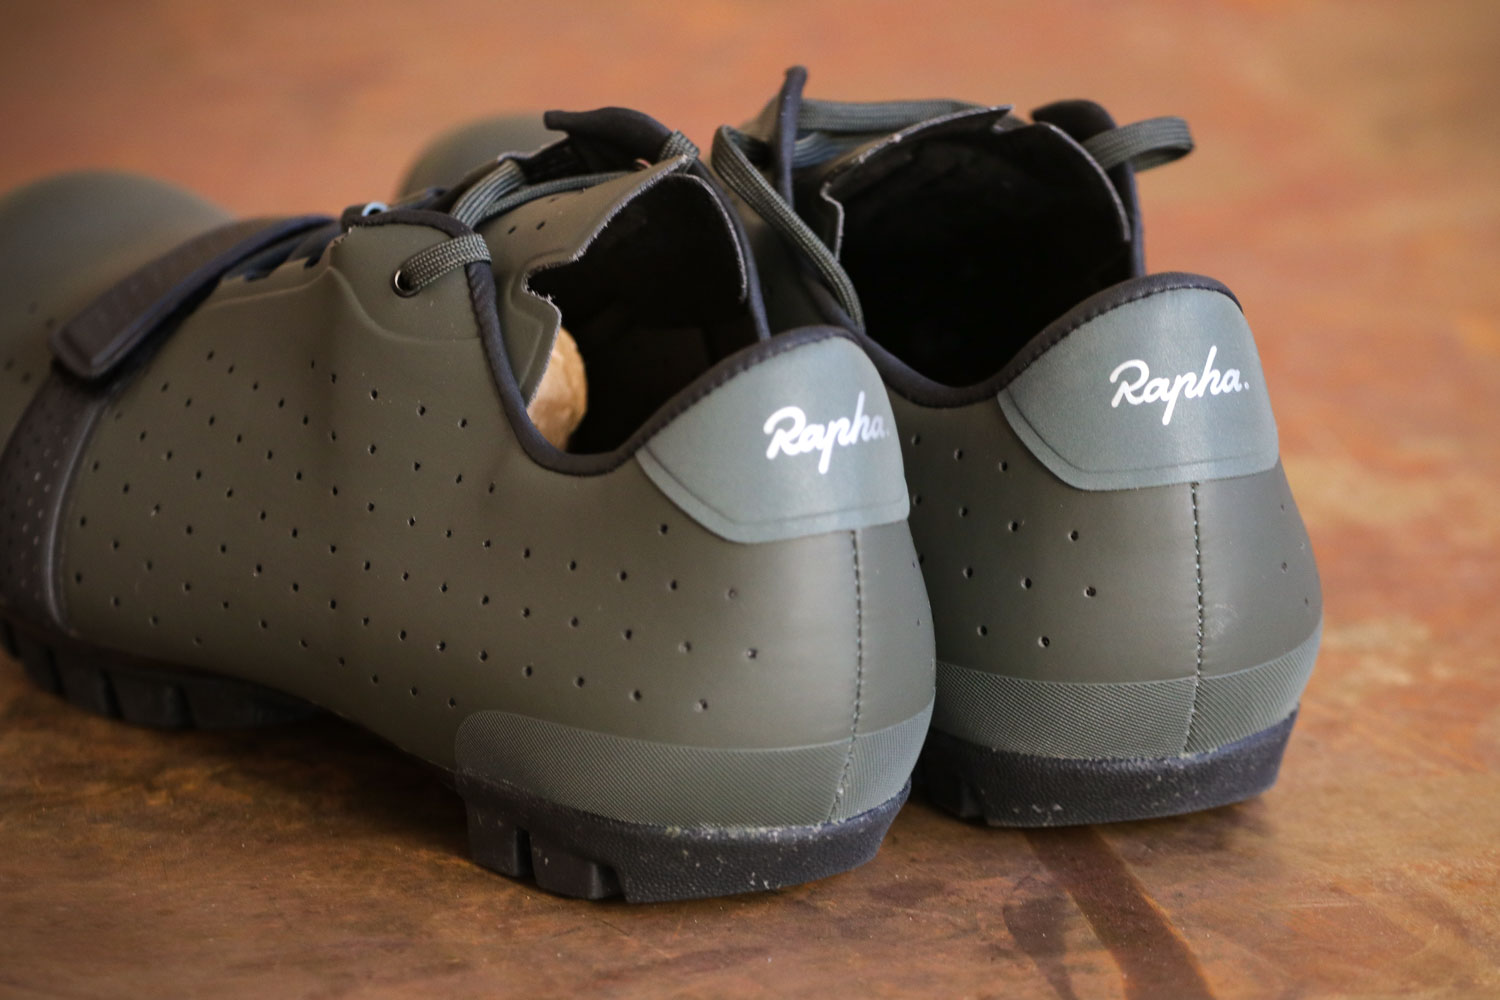 rapha gravel shoes